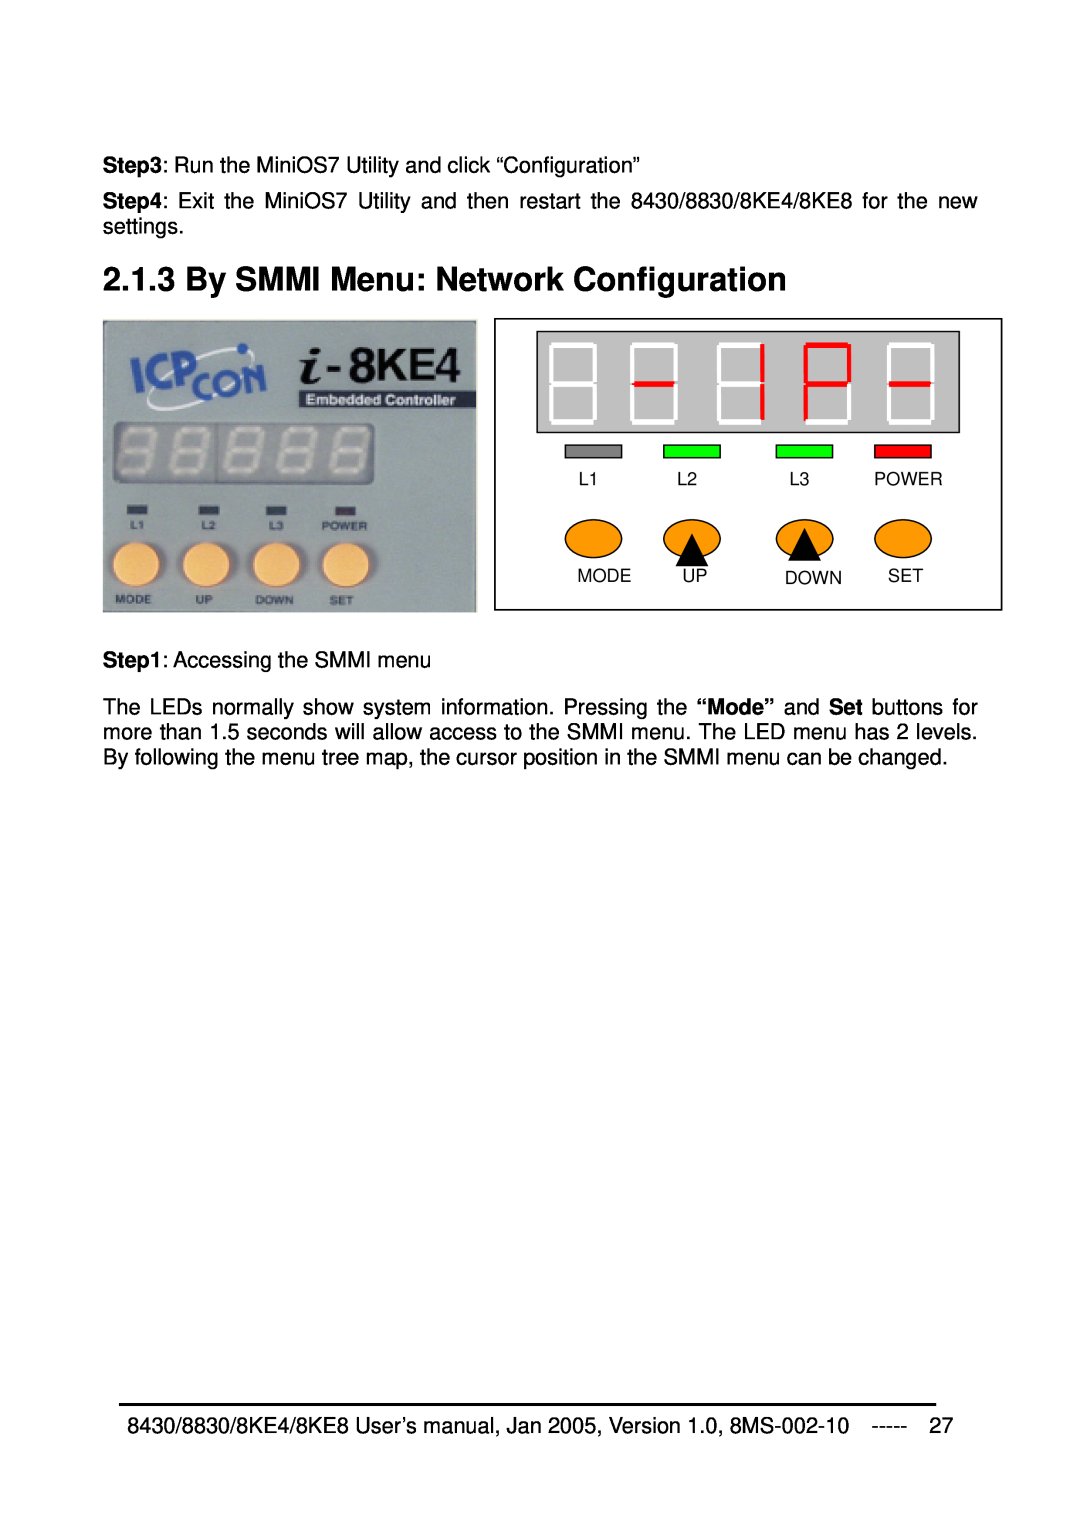 ICP DAS USA 8830, 8KE8, 8KE4, 8430 user manual By SMMI Menu Network Configuration, Power, Mode, Down 